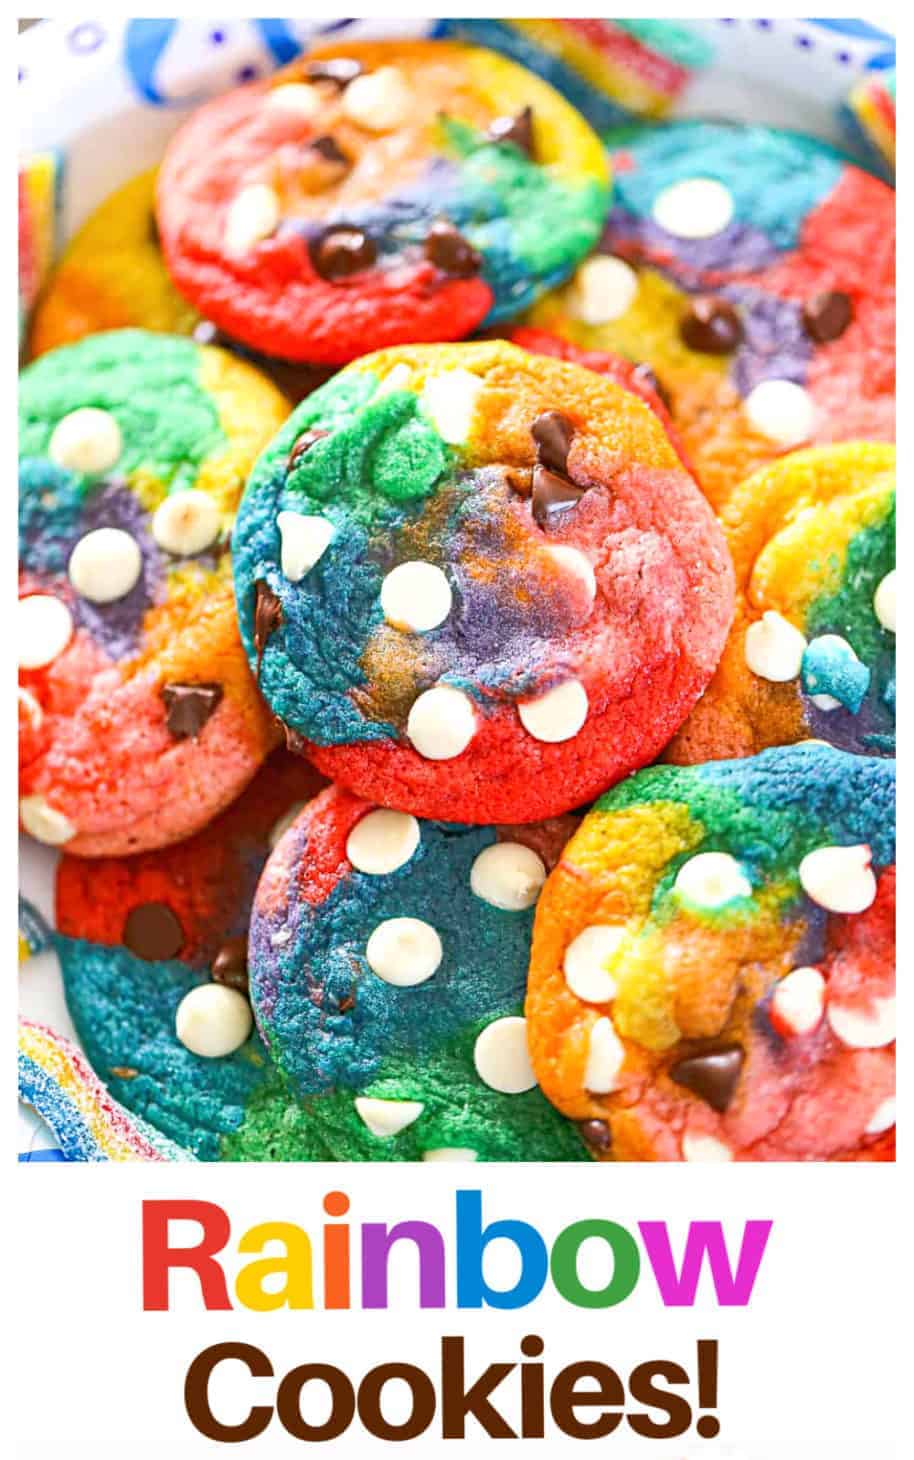 Awesome Rainbow Cookies chocolate chip recipe